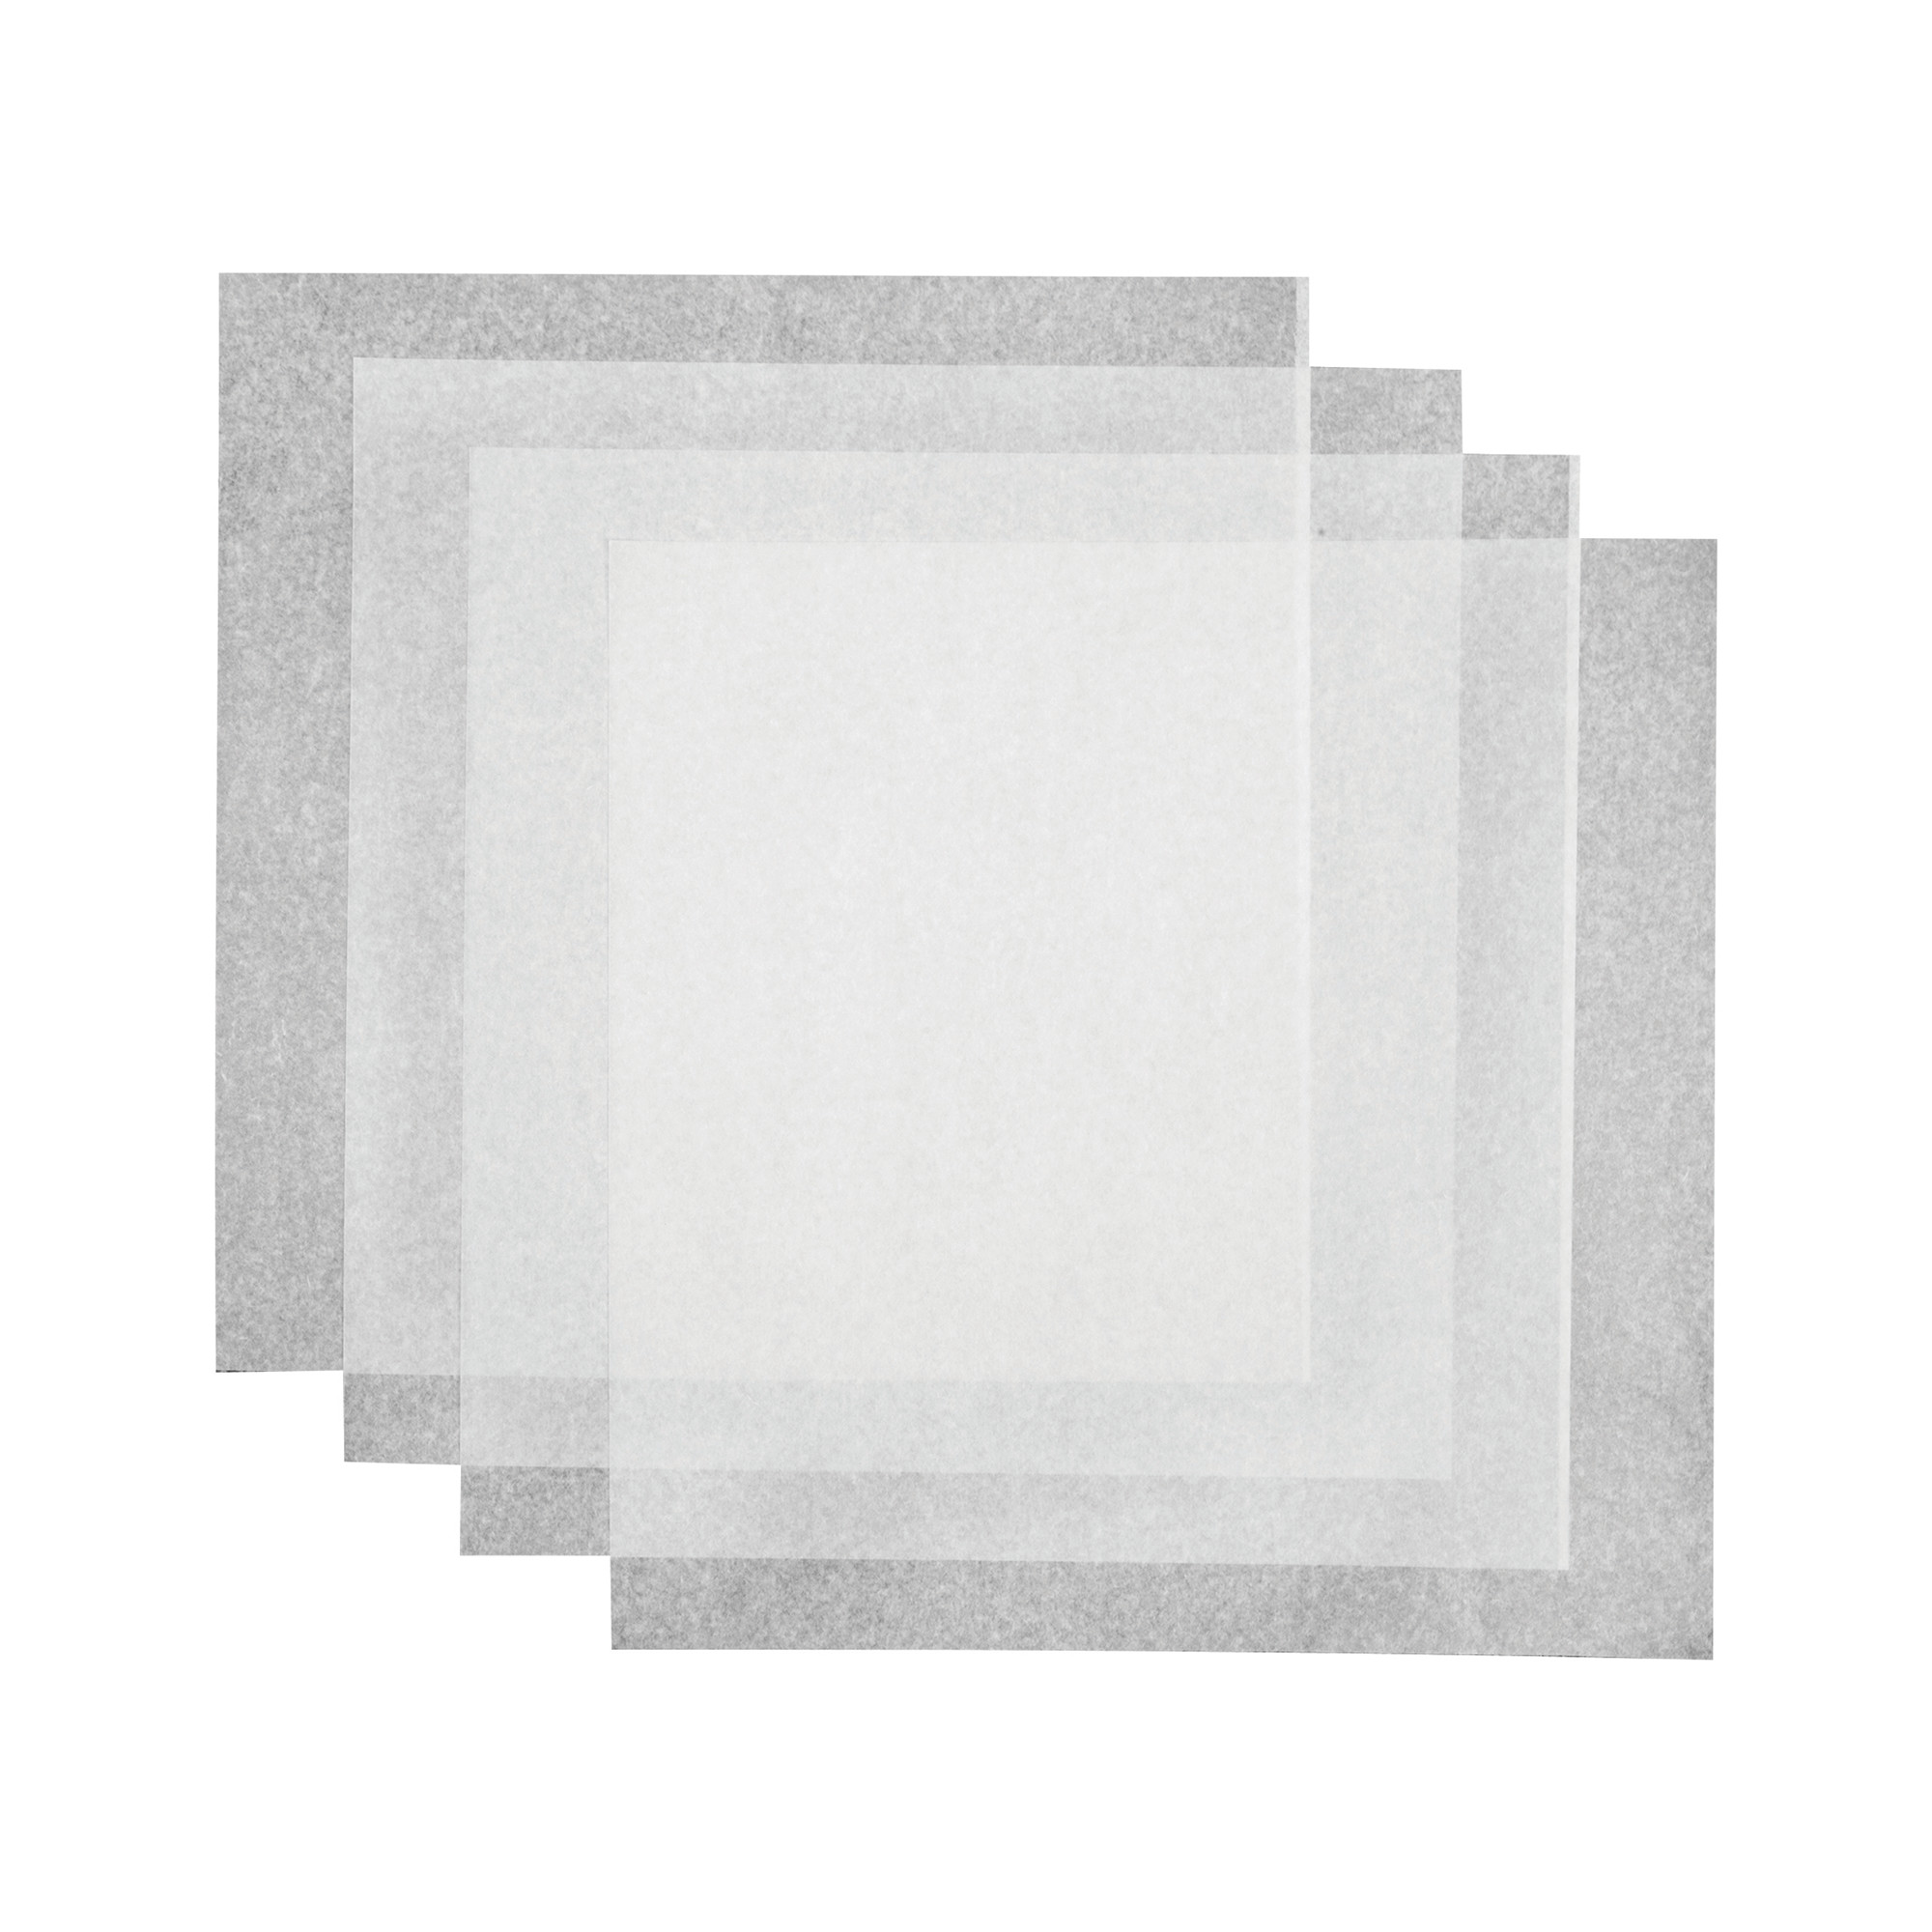 Interfolded Aluminum Foil Sheets, 12 x 10.75, Silver, 500/Box, 6  Boxes/Carton - Zerbee